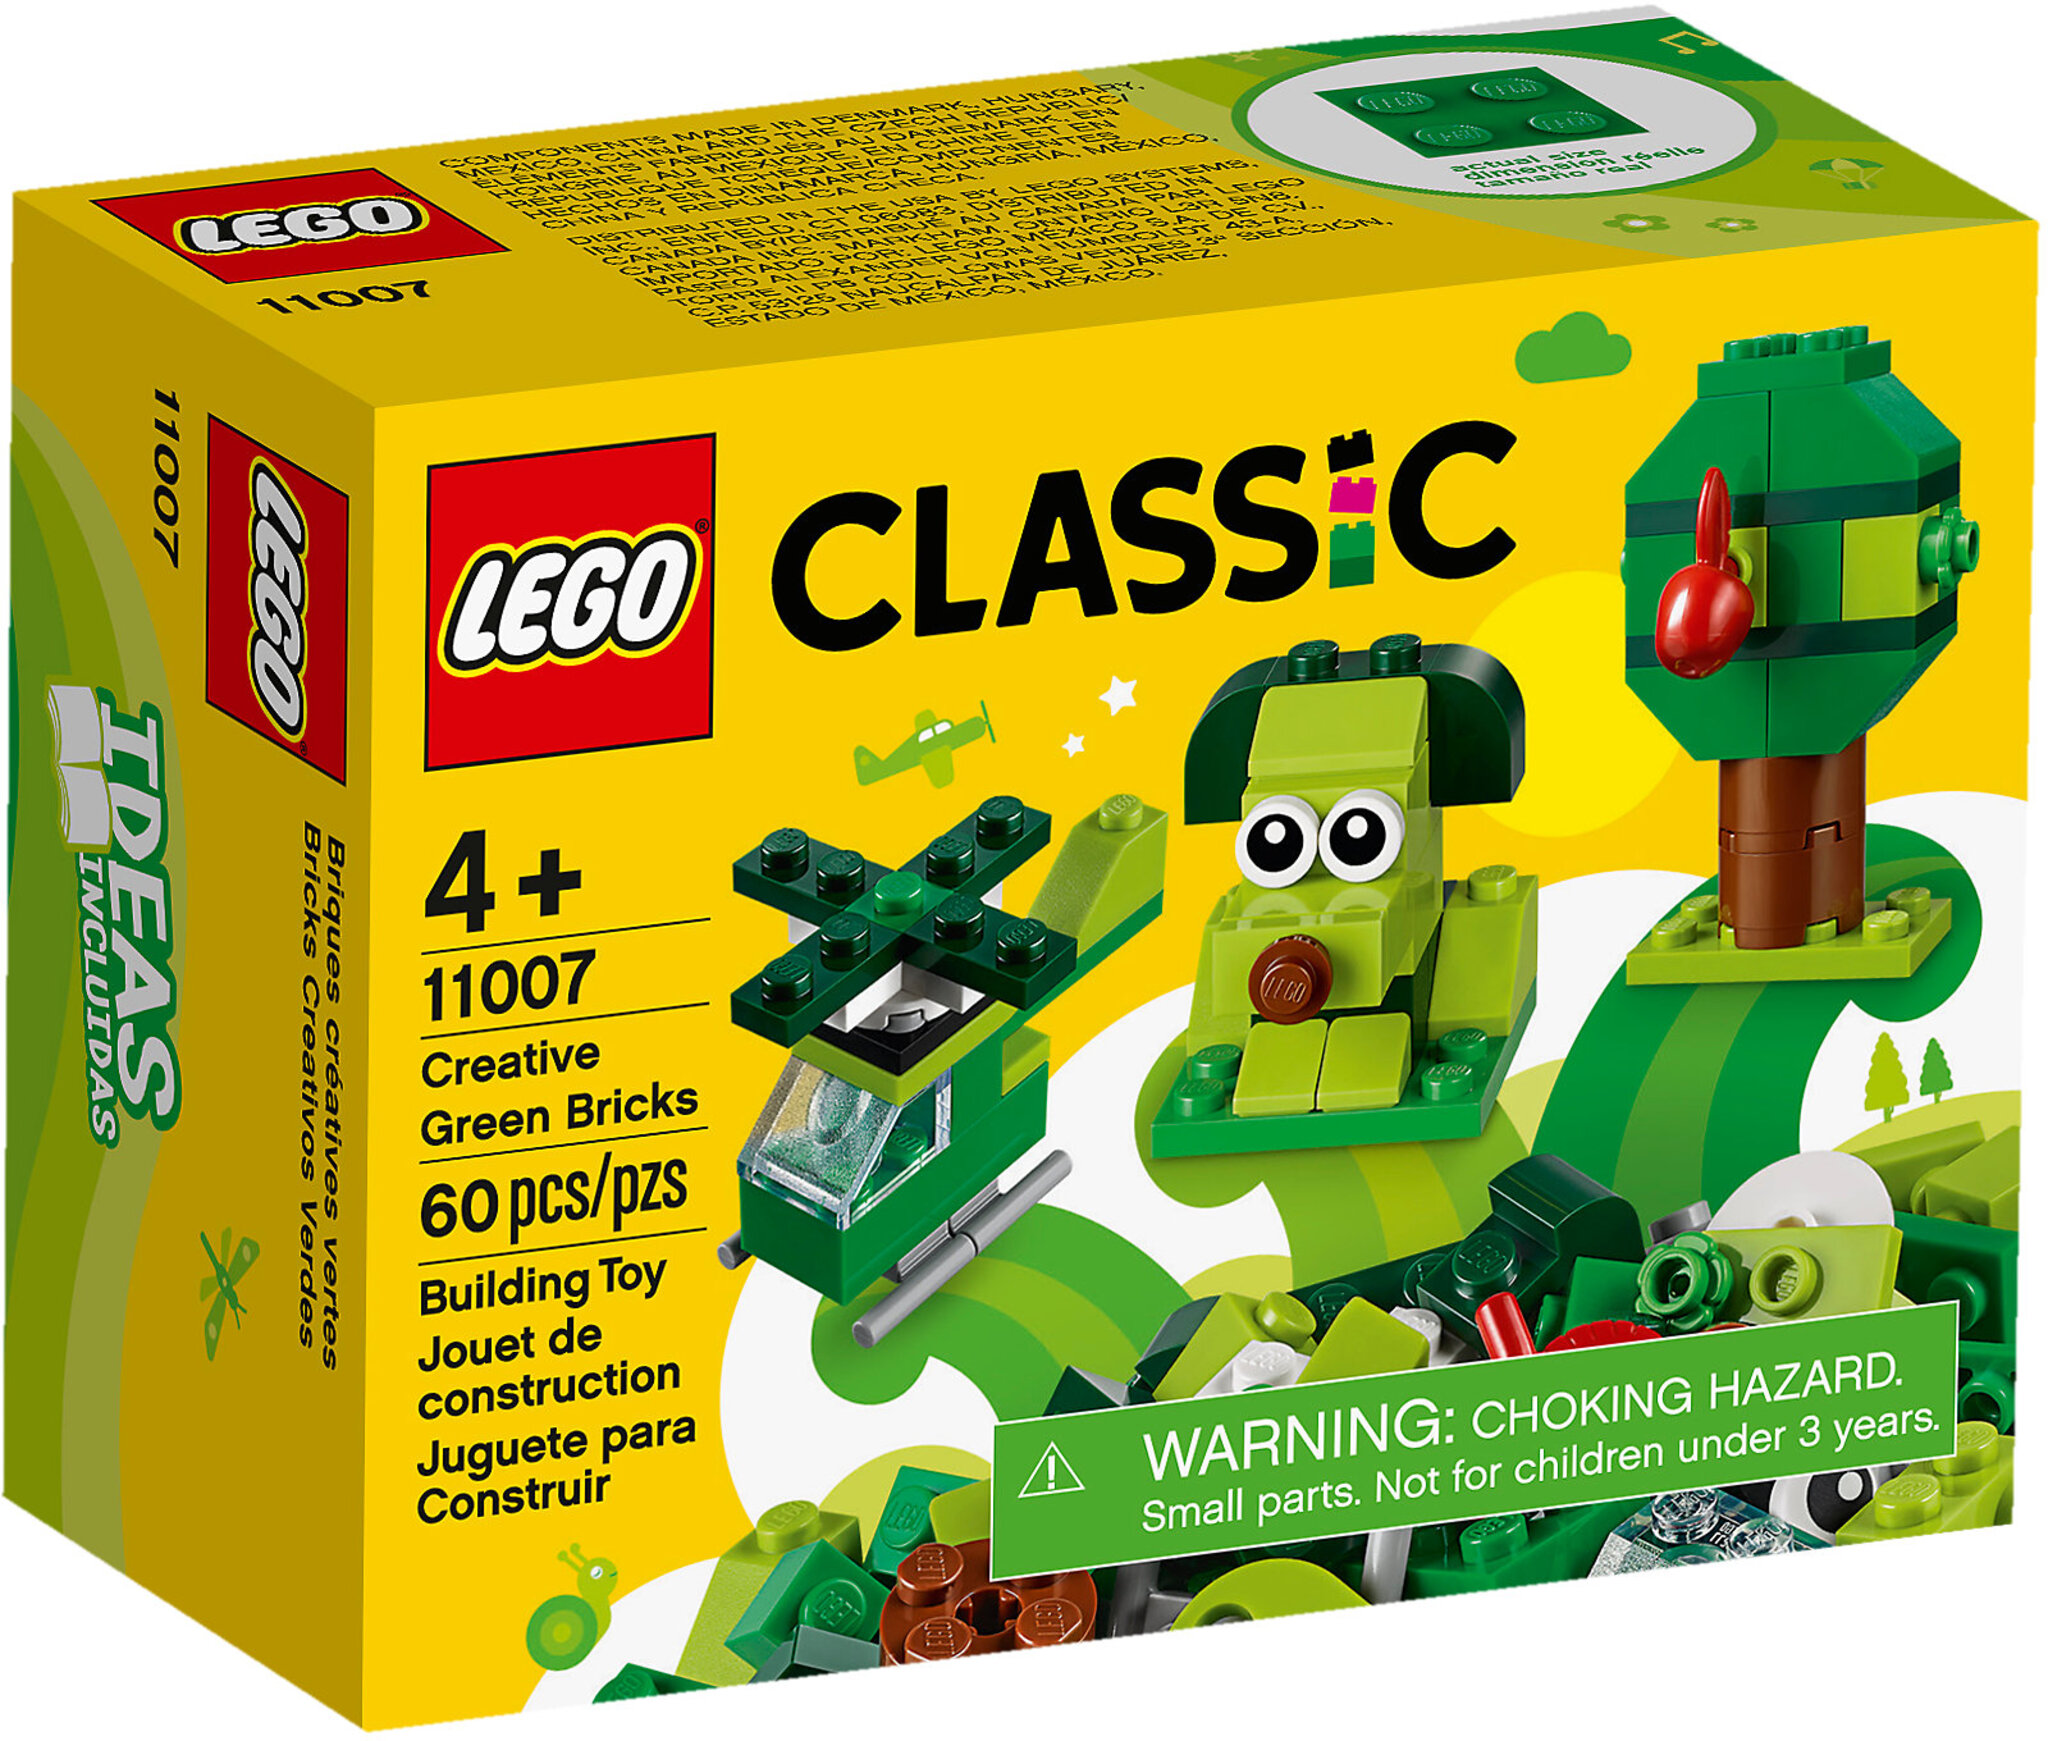 Mattoncini bianchi creativi - Lego Classic 11012